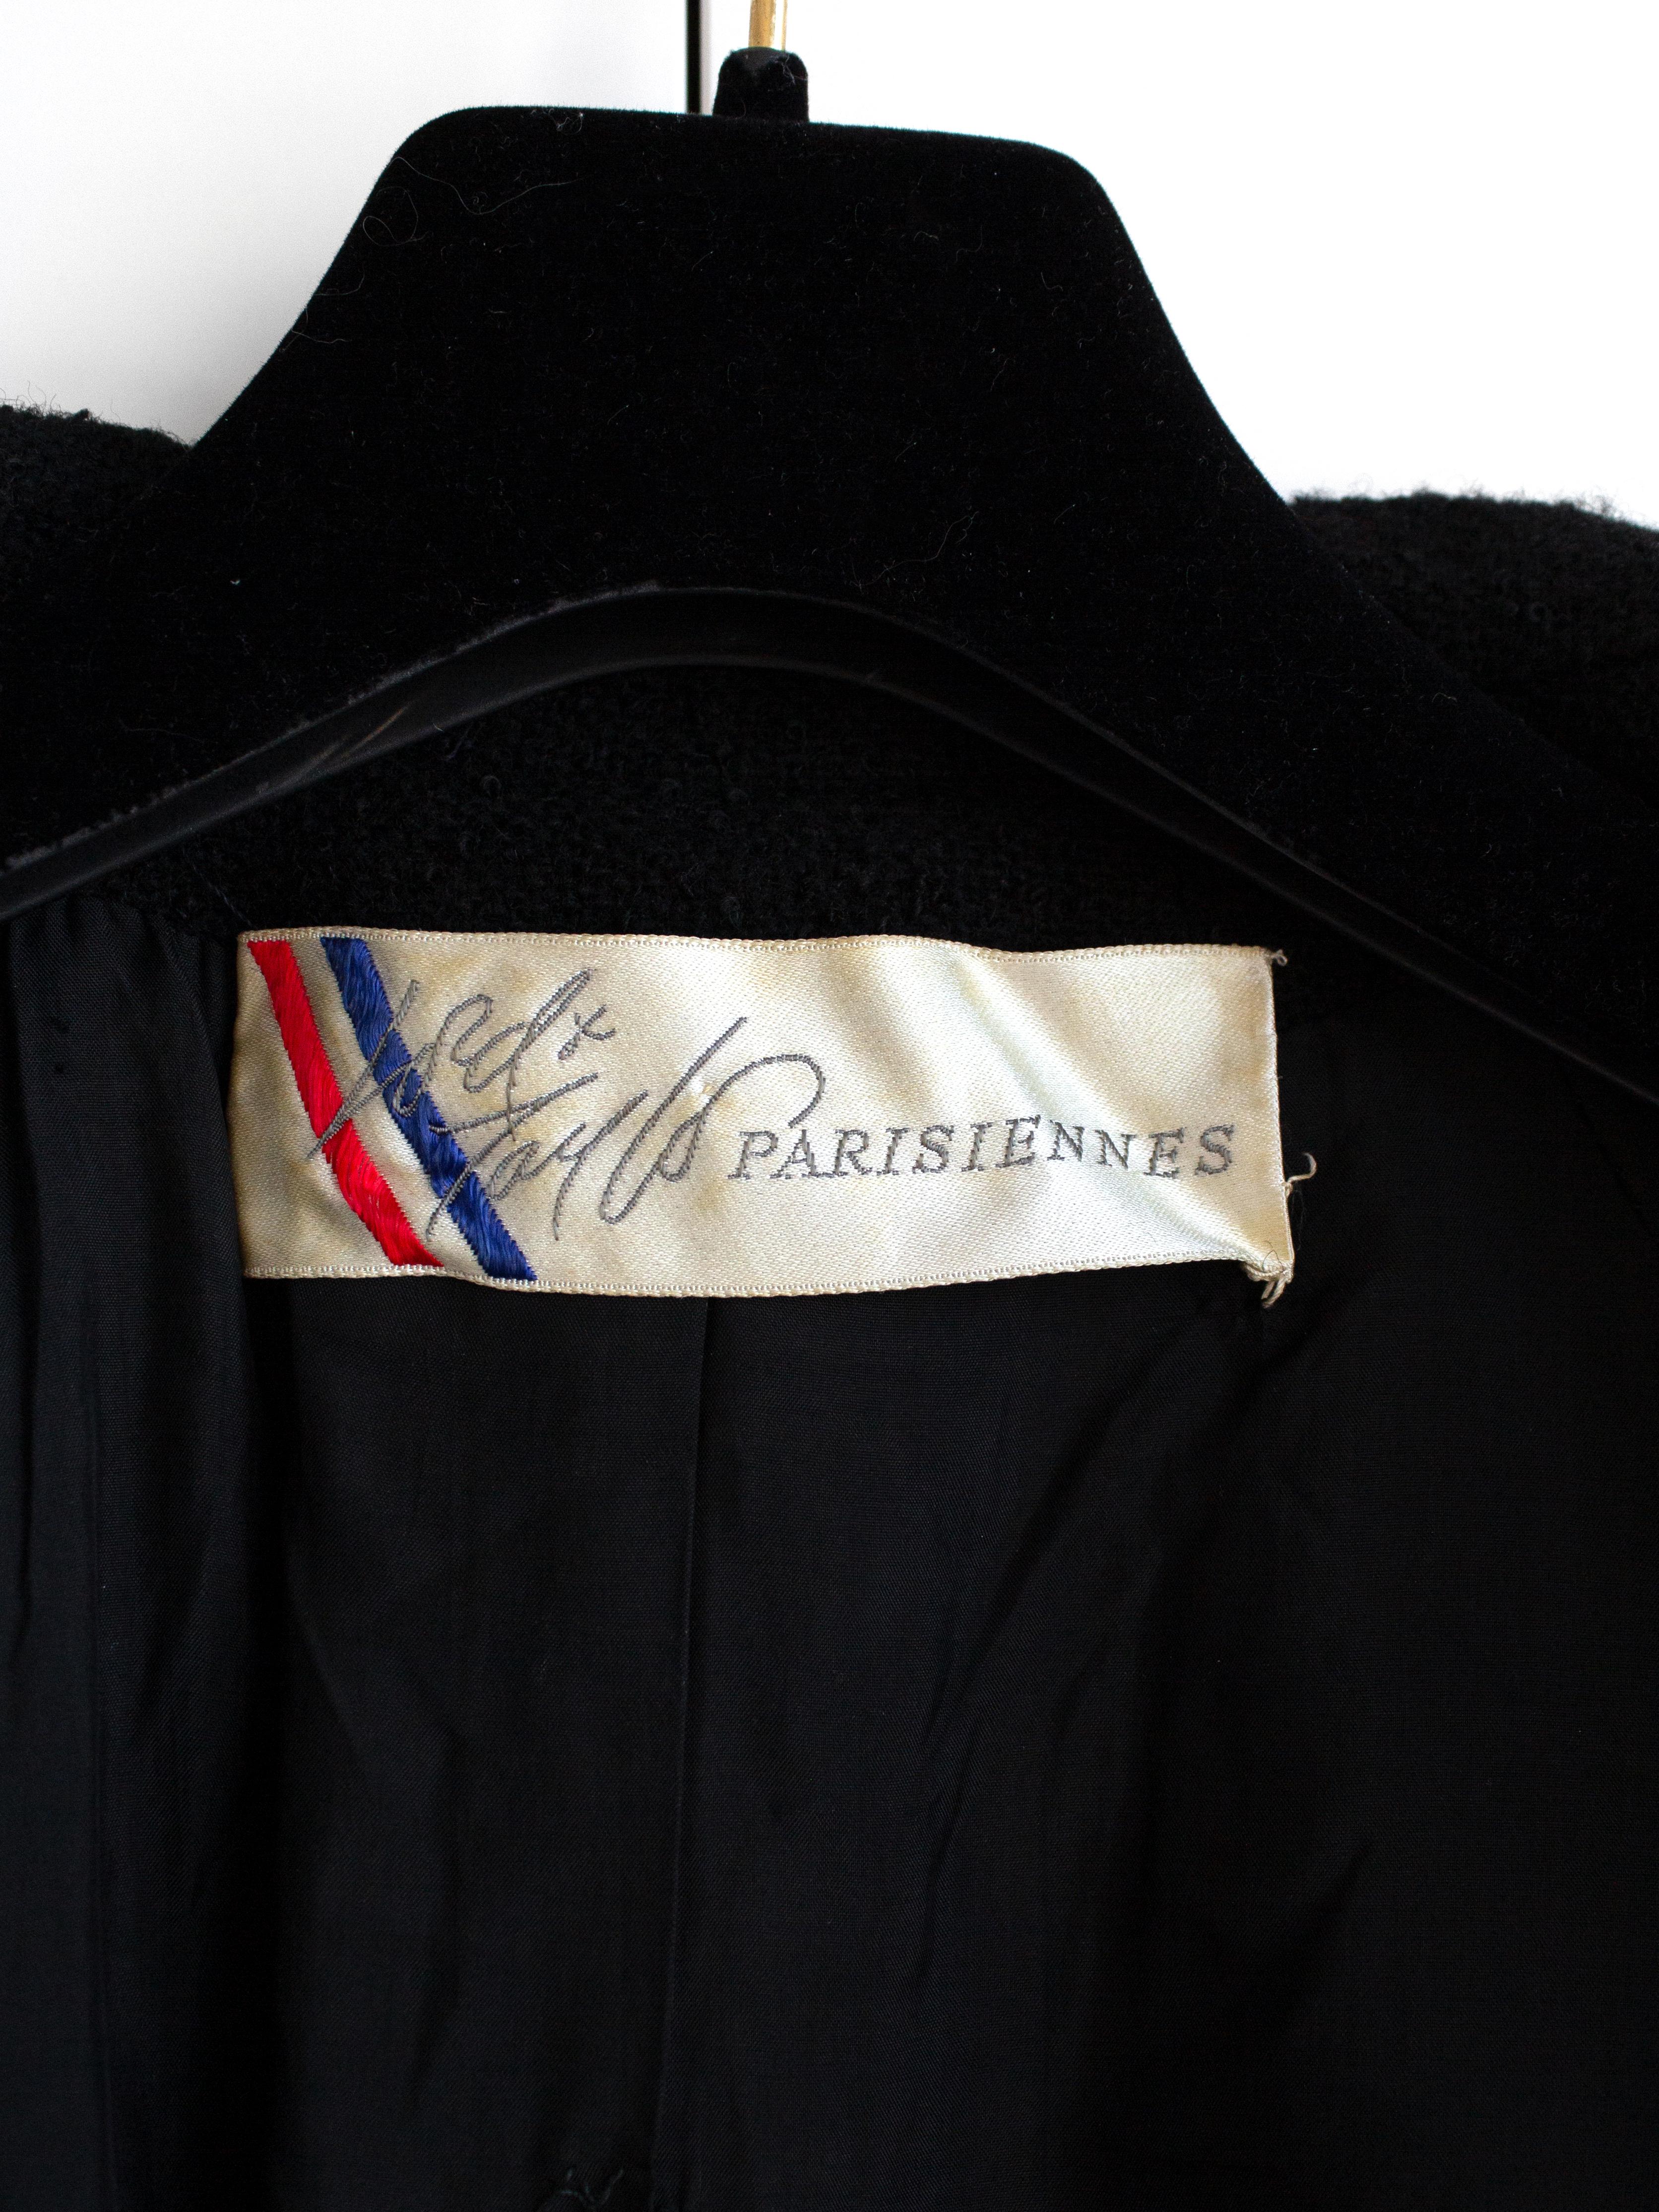 Lord & Taylor Parisiennes 1970s Black Gold Jackie Fringe Tweed Jacket For Sale 3